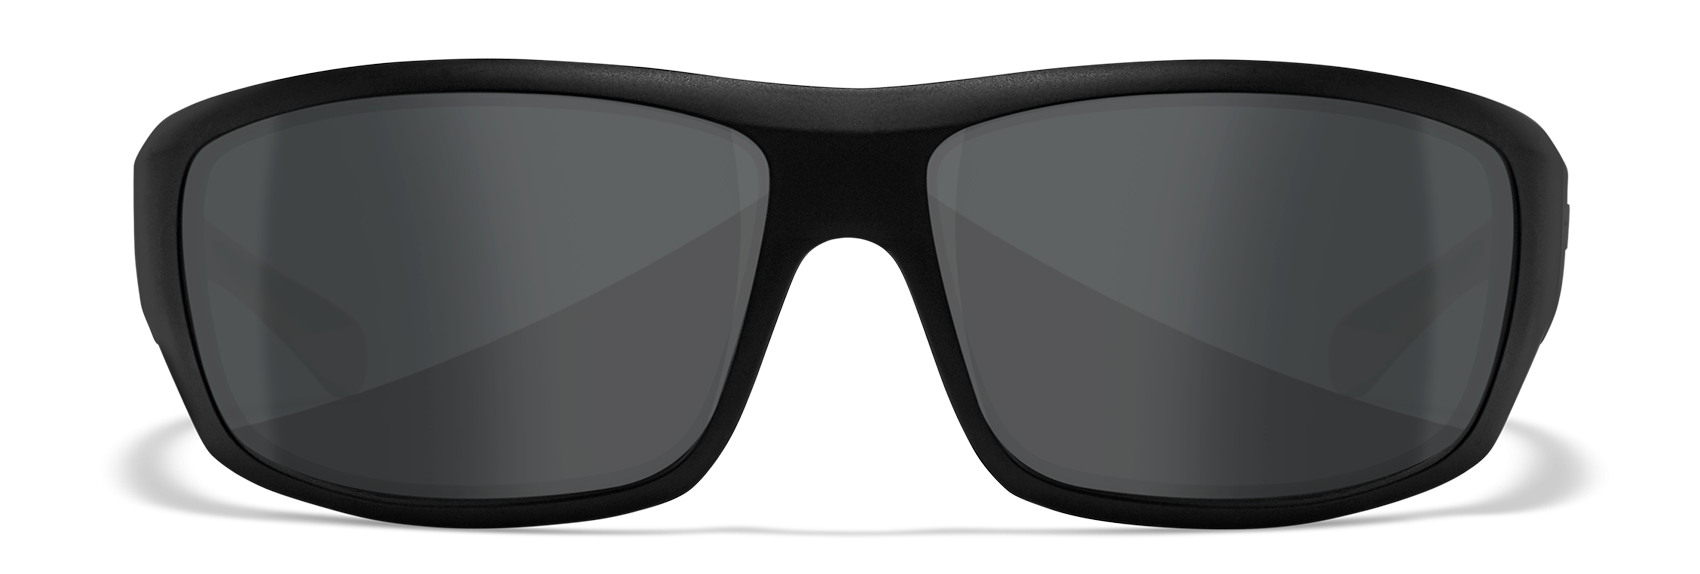 Wiley X WX Omega Smoke Gray Lens Polycarbonate Sunglasses